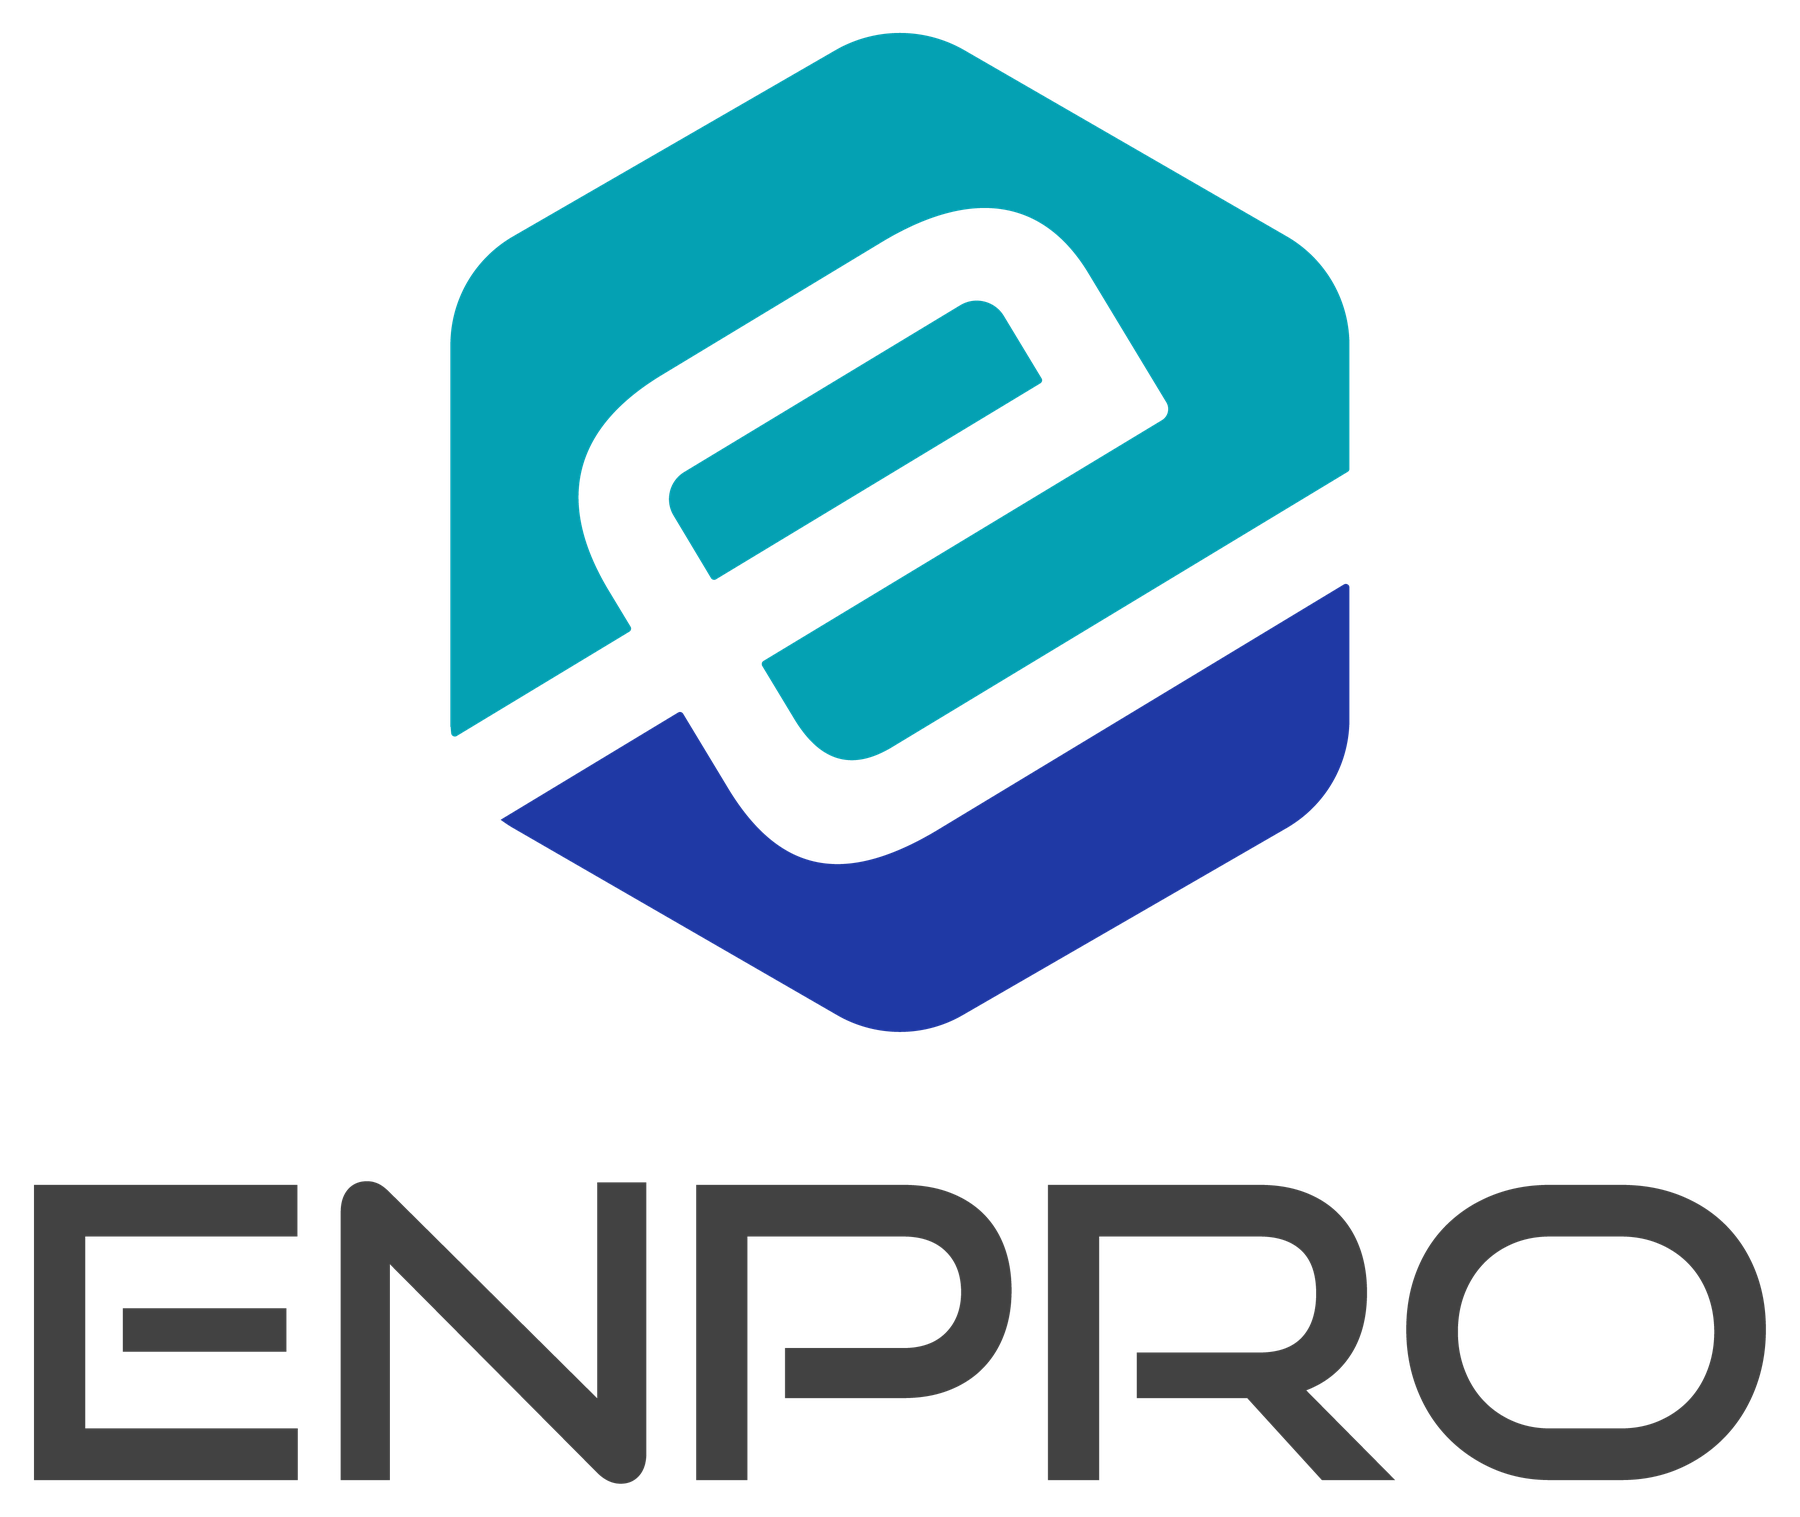 EnPro Industries